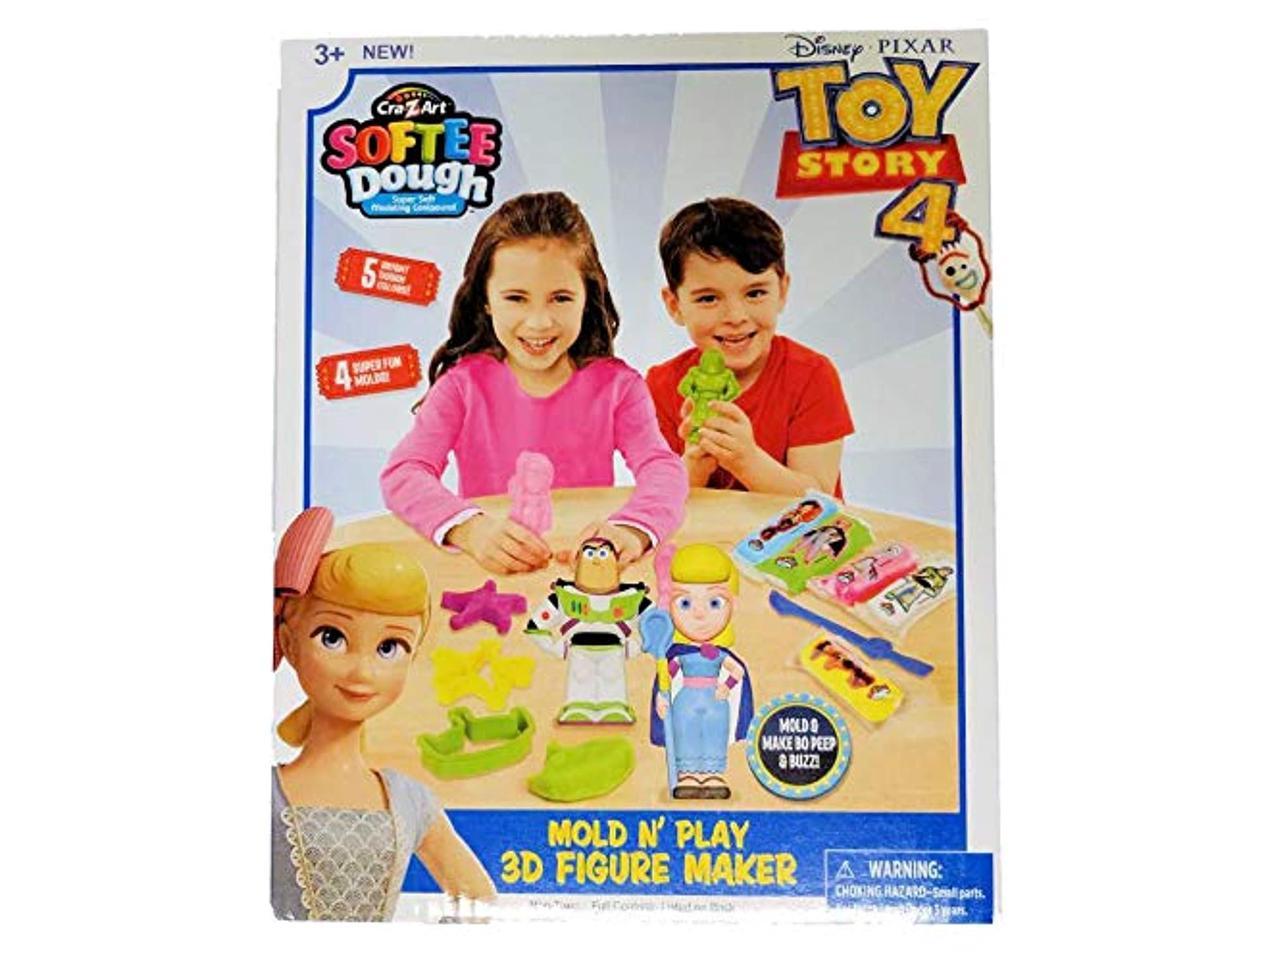 Toy Story 4 Mold N Play 3d Figure Maker CRA-Z-ART Softee Dough Doh Disney C1 for sale online 